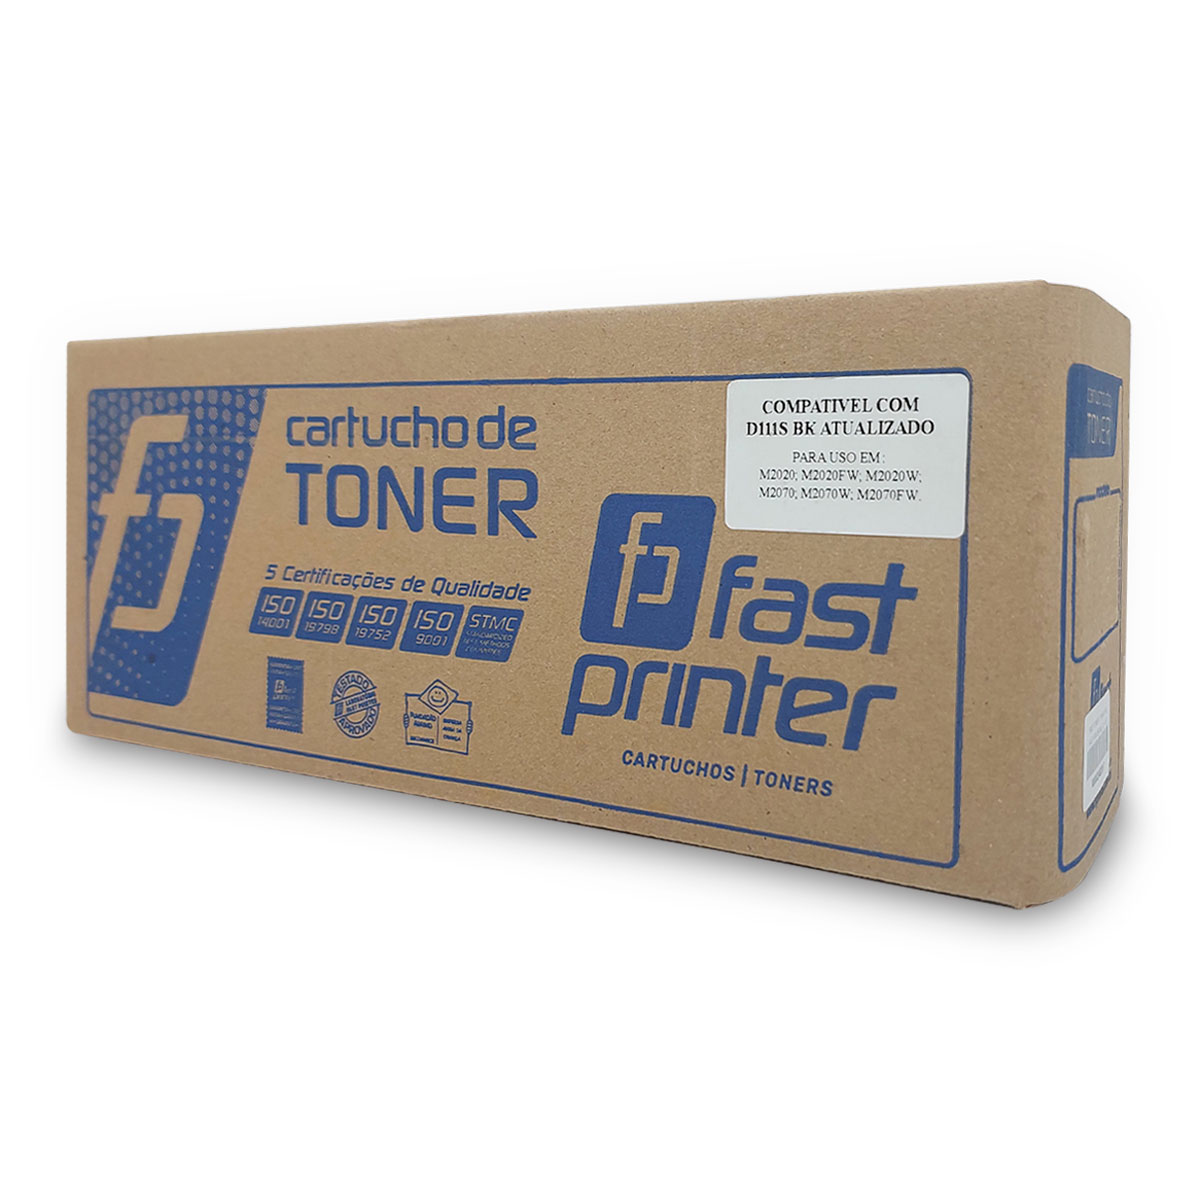 Toner Compatível Fast Printer MLT D111S, Preto, 1000 Páginas